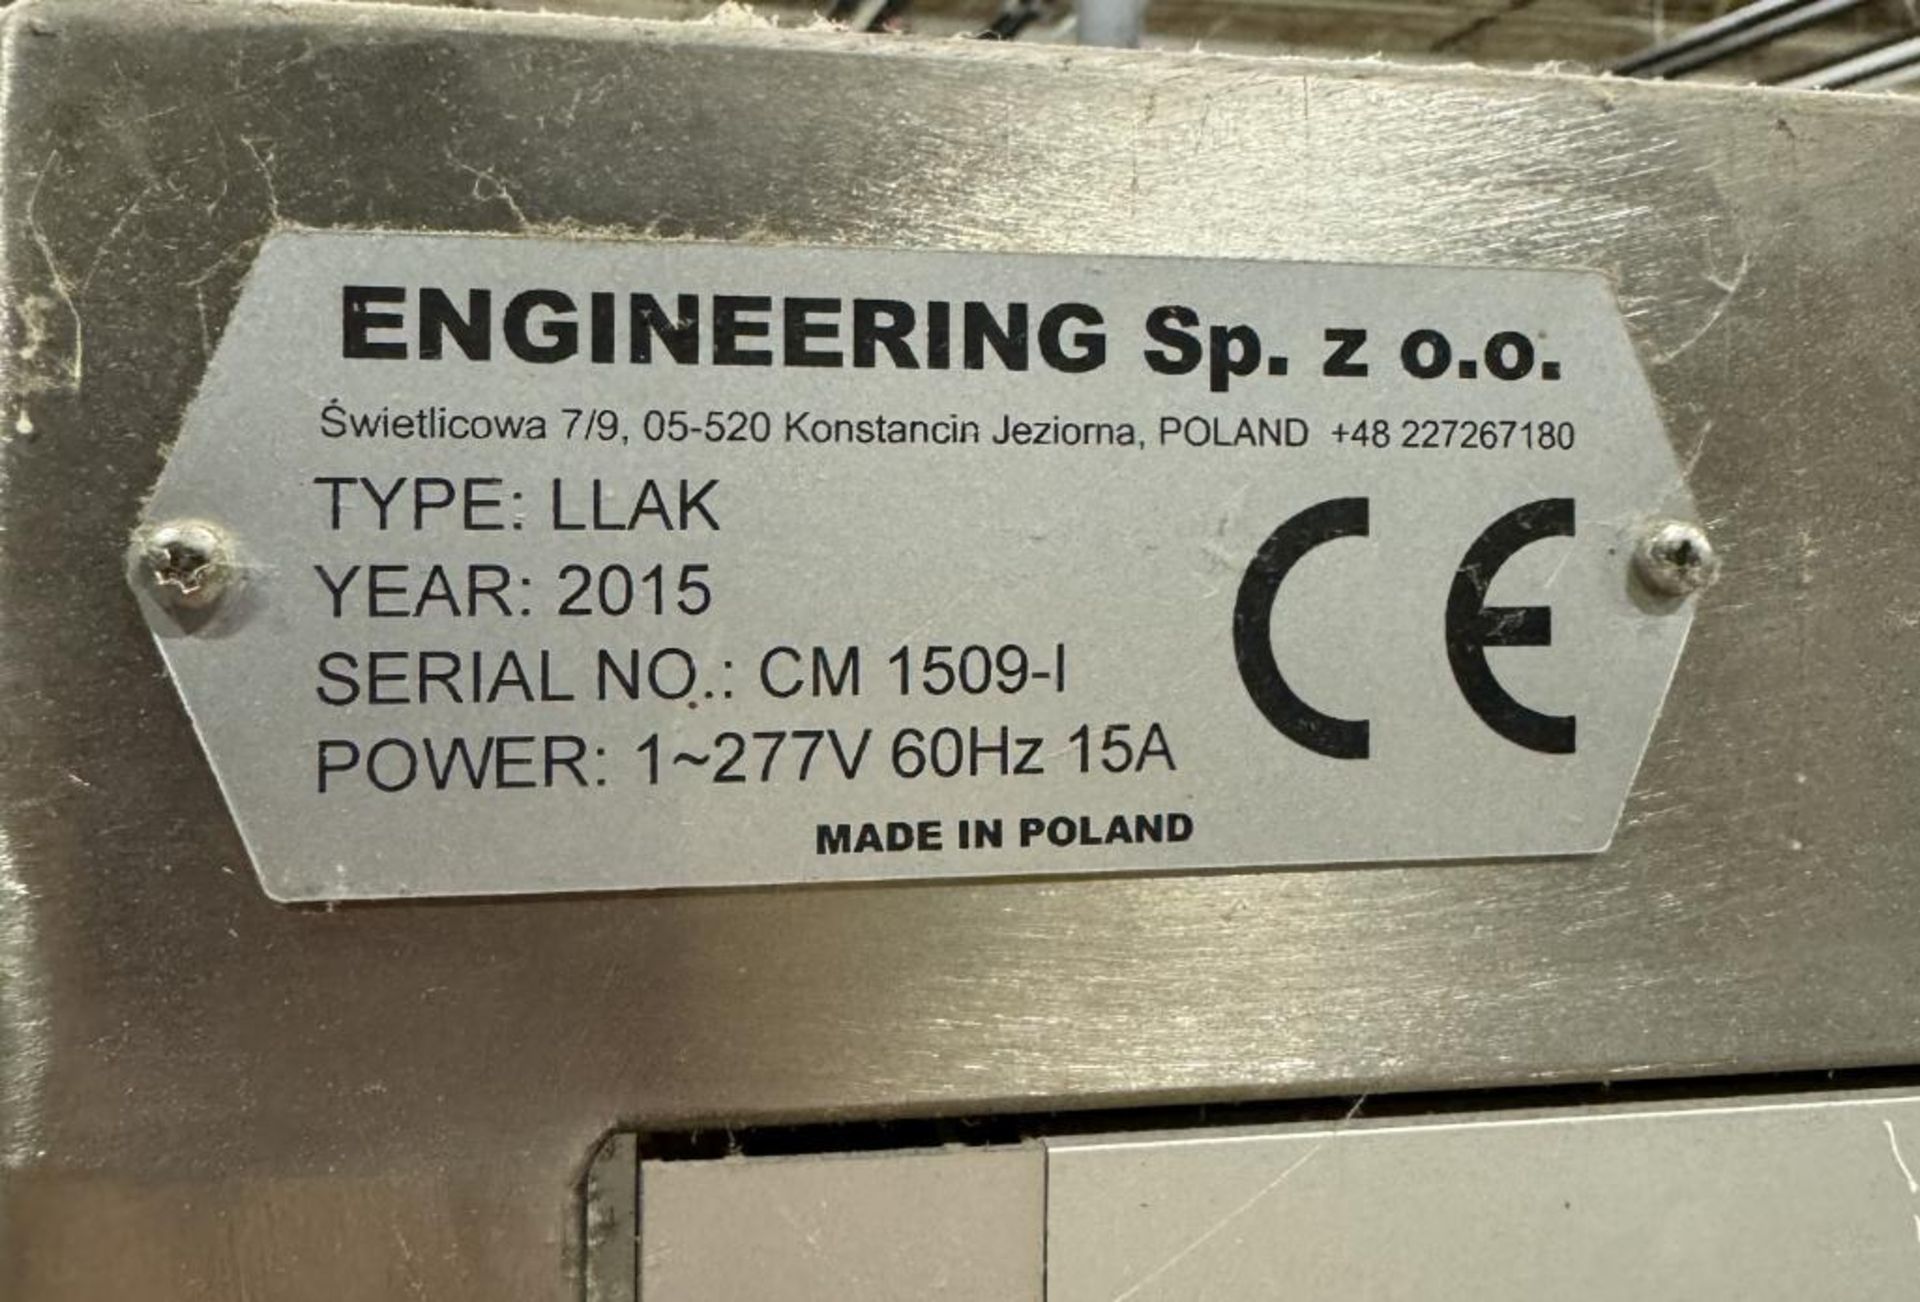 Engineering Sp. LLAK Lid Machine, Serial# CM 1509-I, Built 2015. - Image 16 of 16